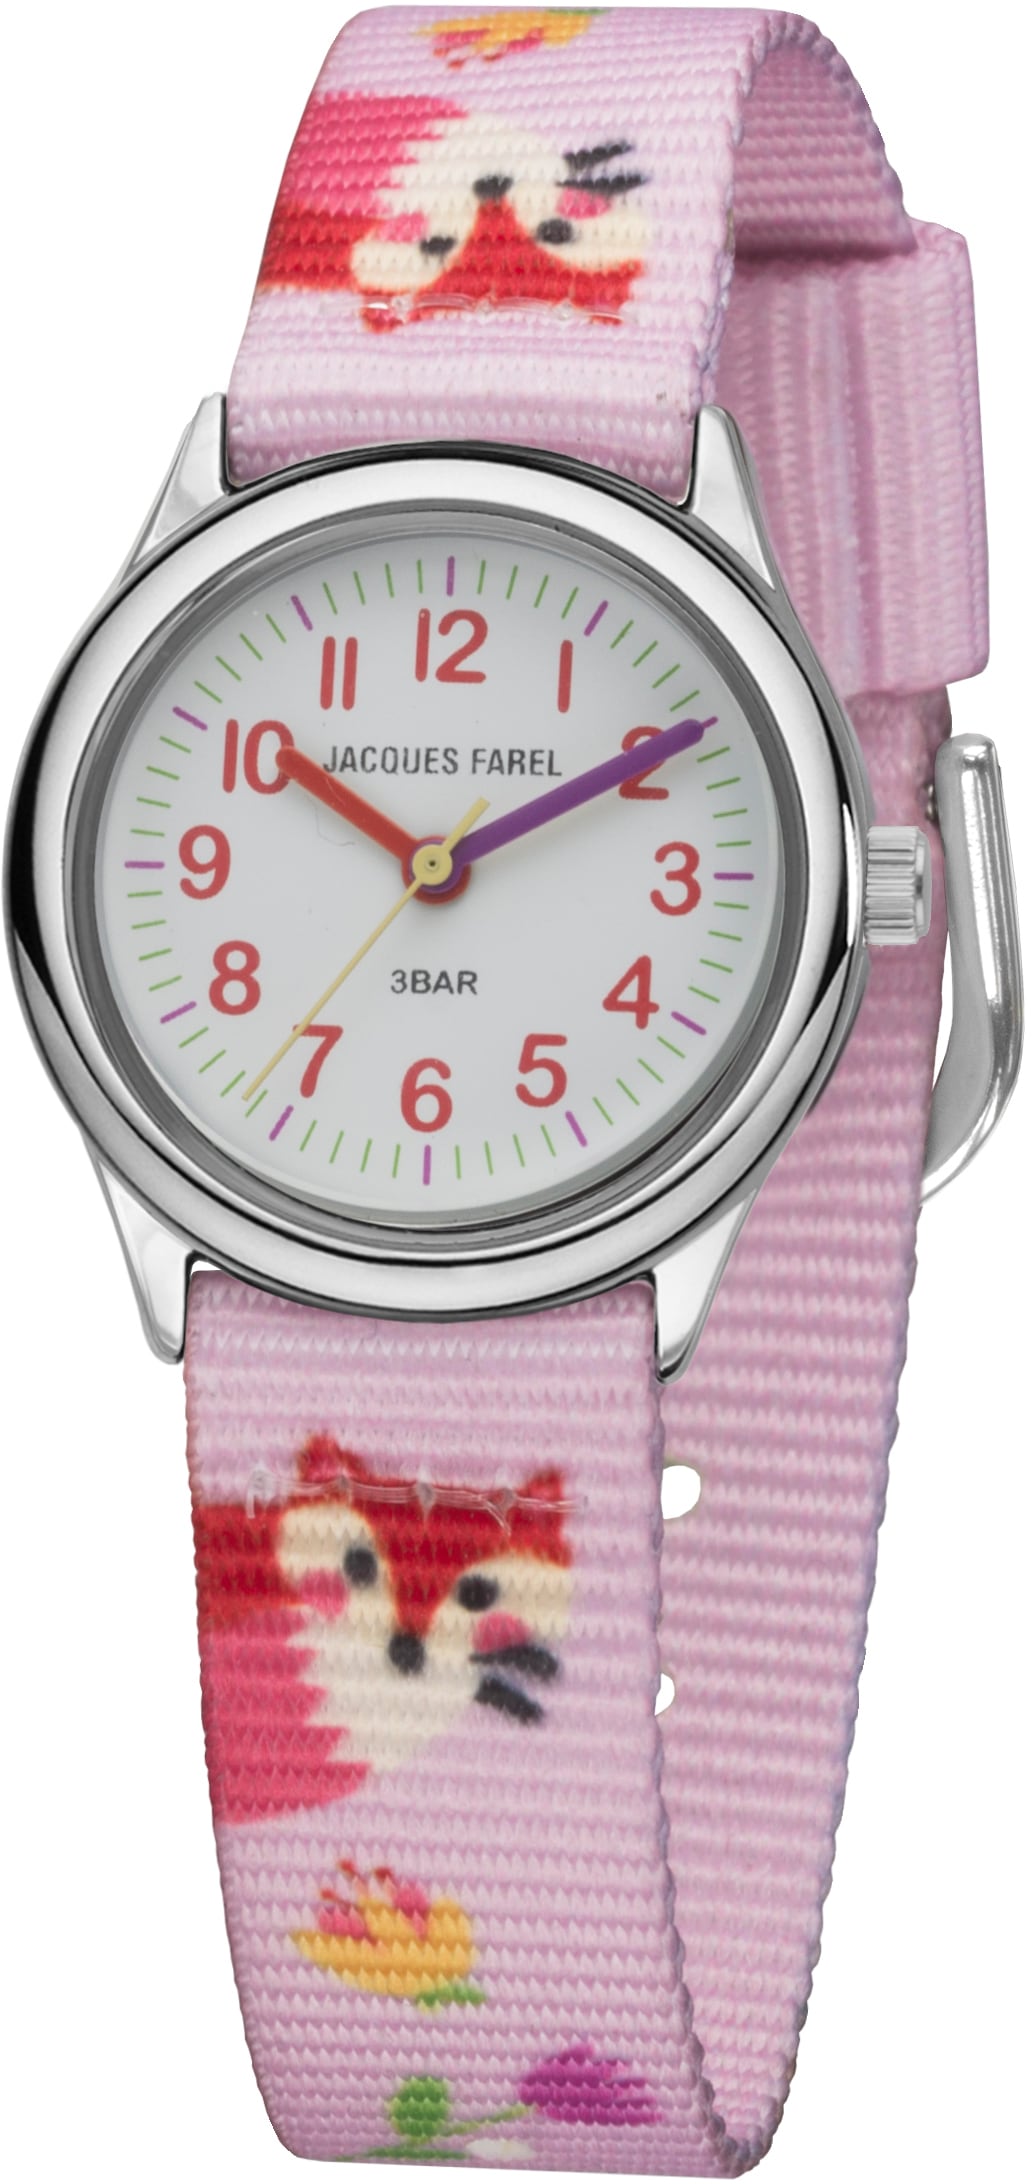 Jacques Farel Quarzuhr »HCC 300«, Armbanduhr, Kinderuhr, Mädchenuhr, ideal auch als Geschenk